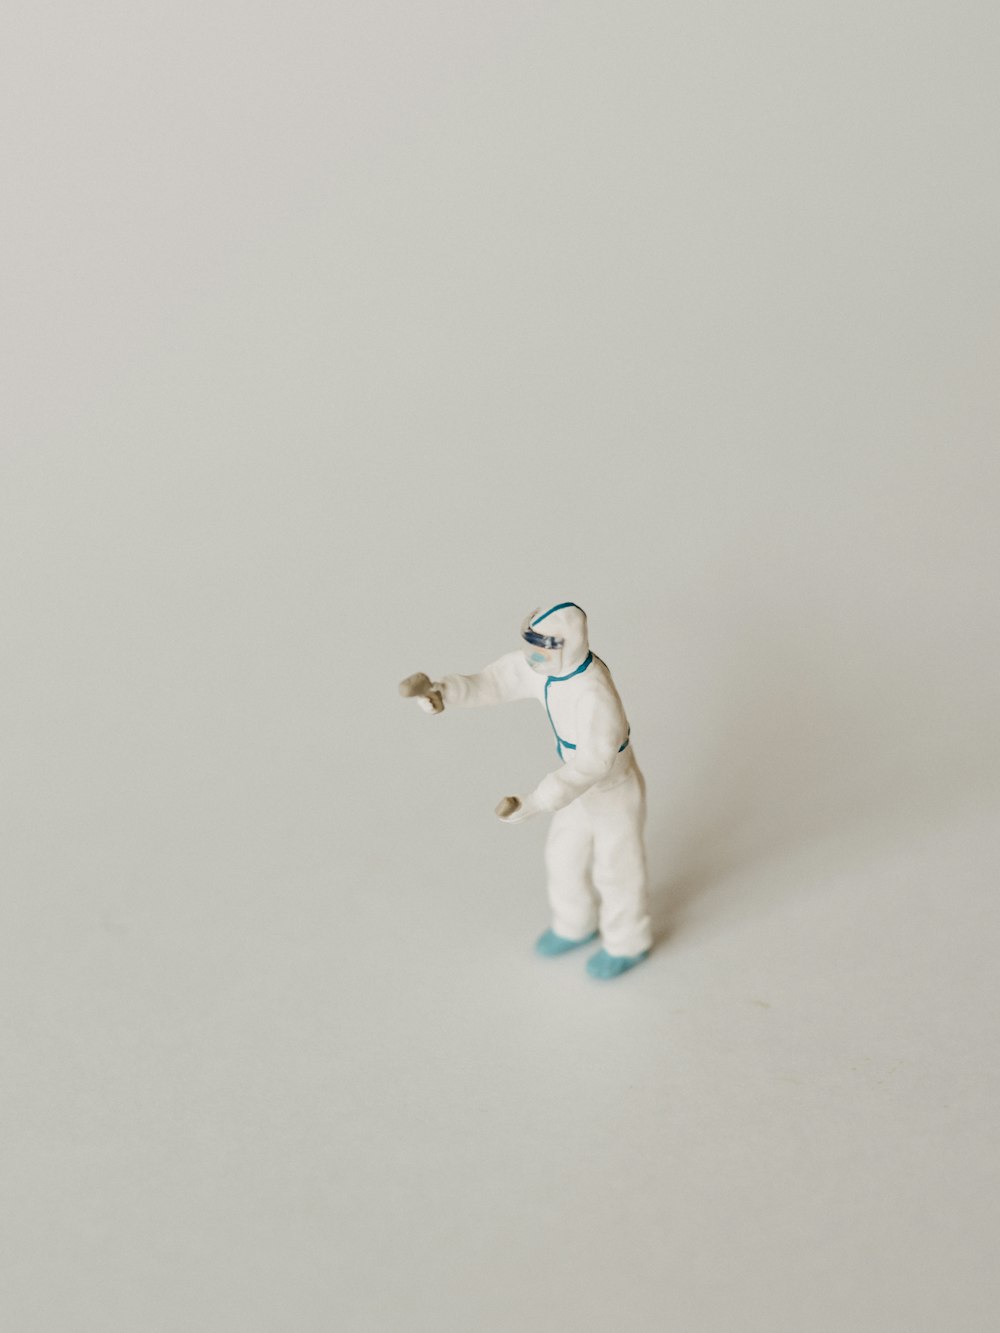 a small white polar bear figurine on a white surface